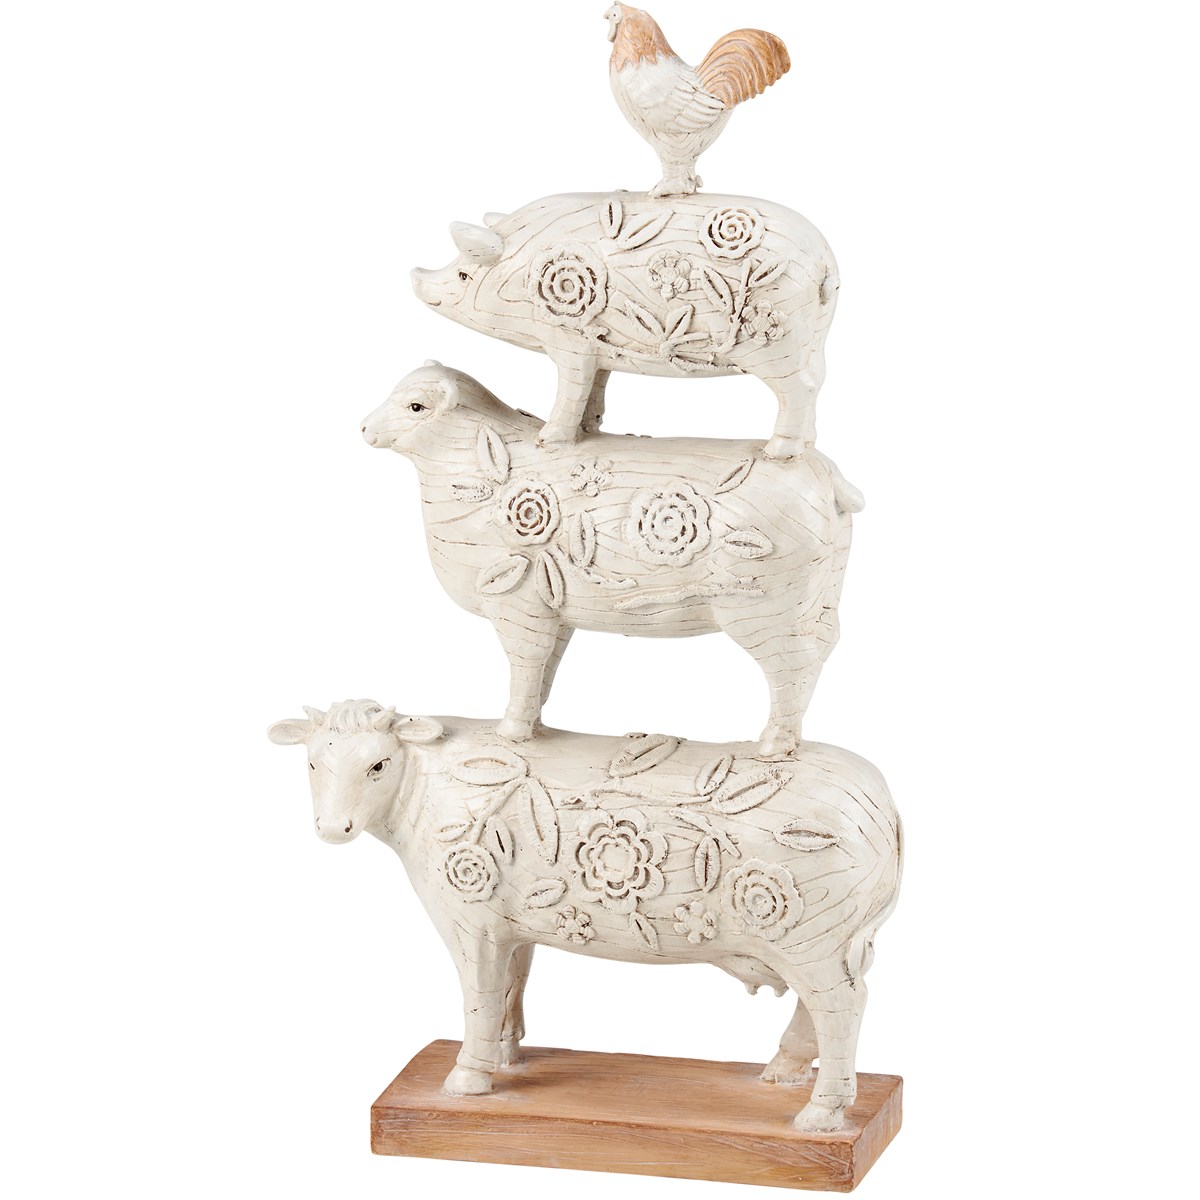 Stacked Farm Animals Figurine - Resin